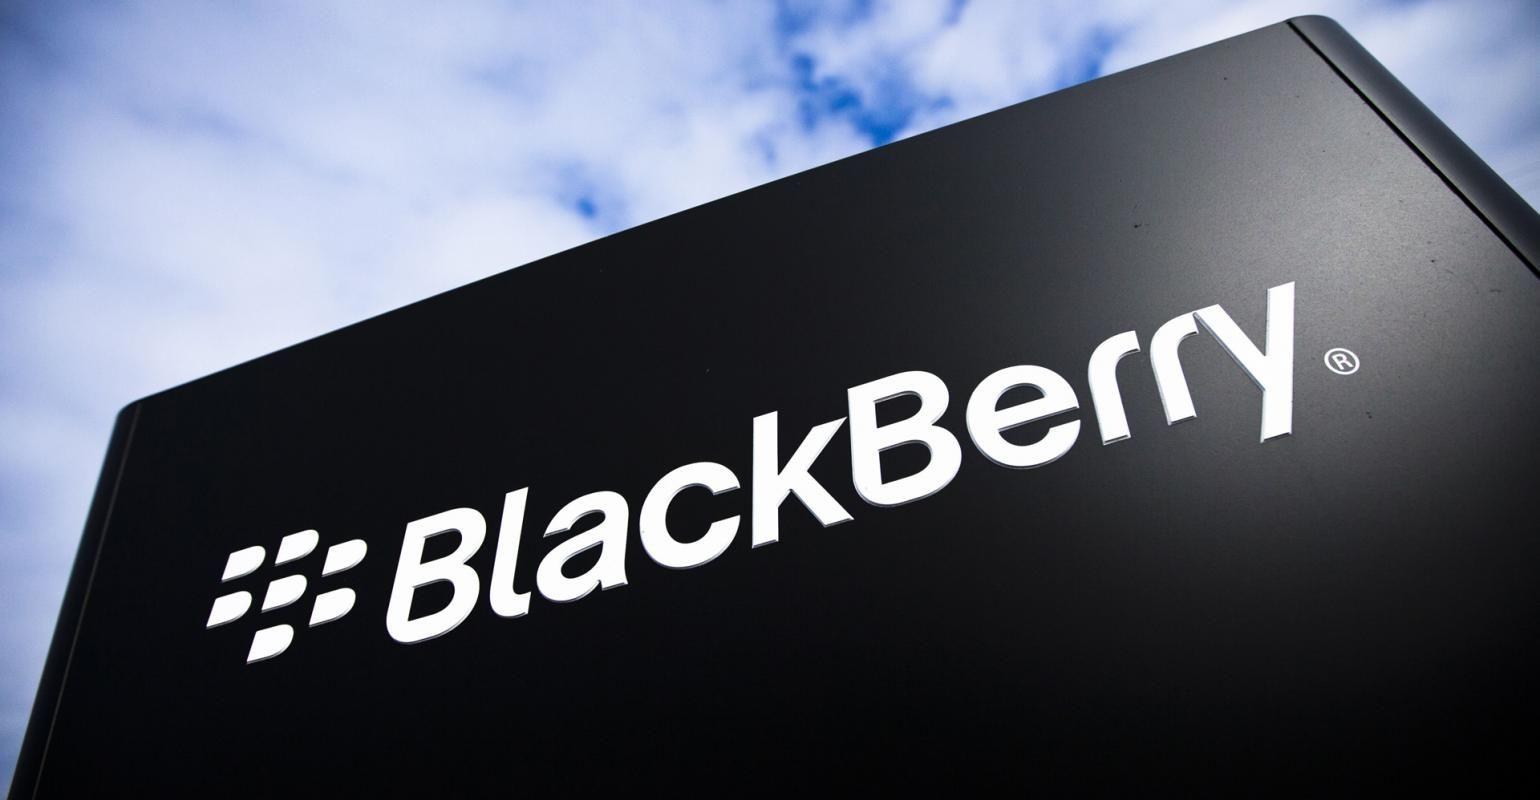 BlackBerry Logo - BlackBerry Shares Jump as Software Revenue Picks Up Steam